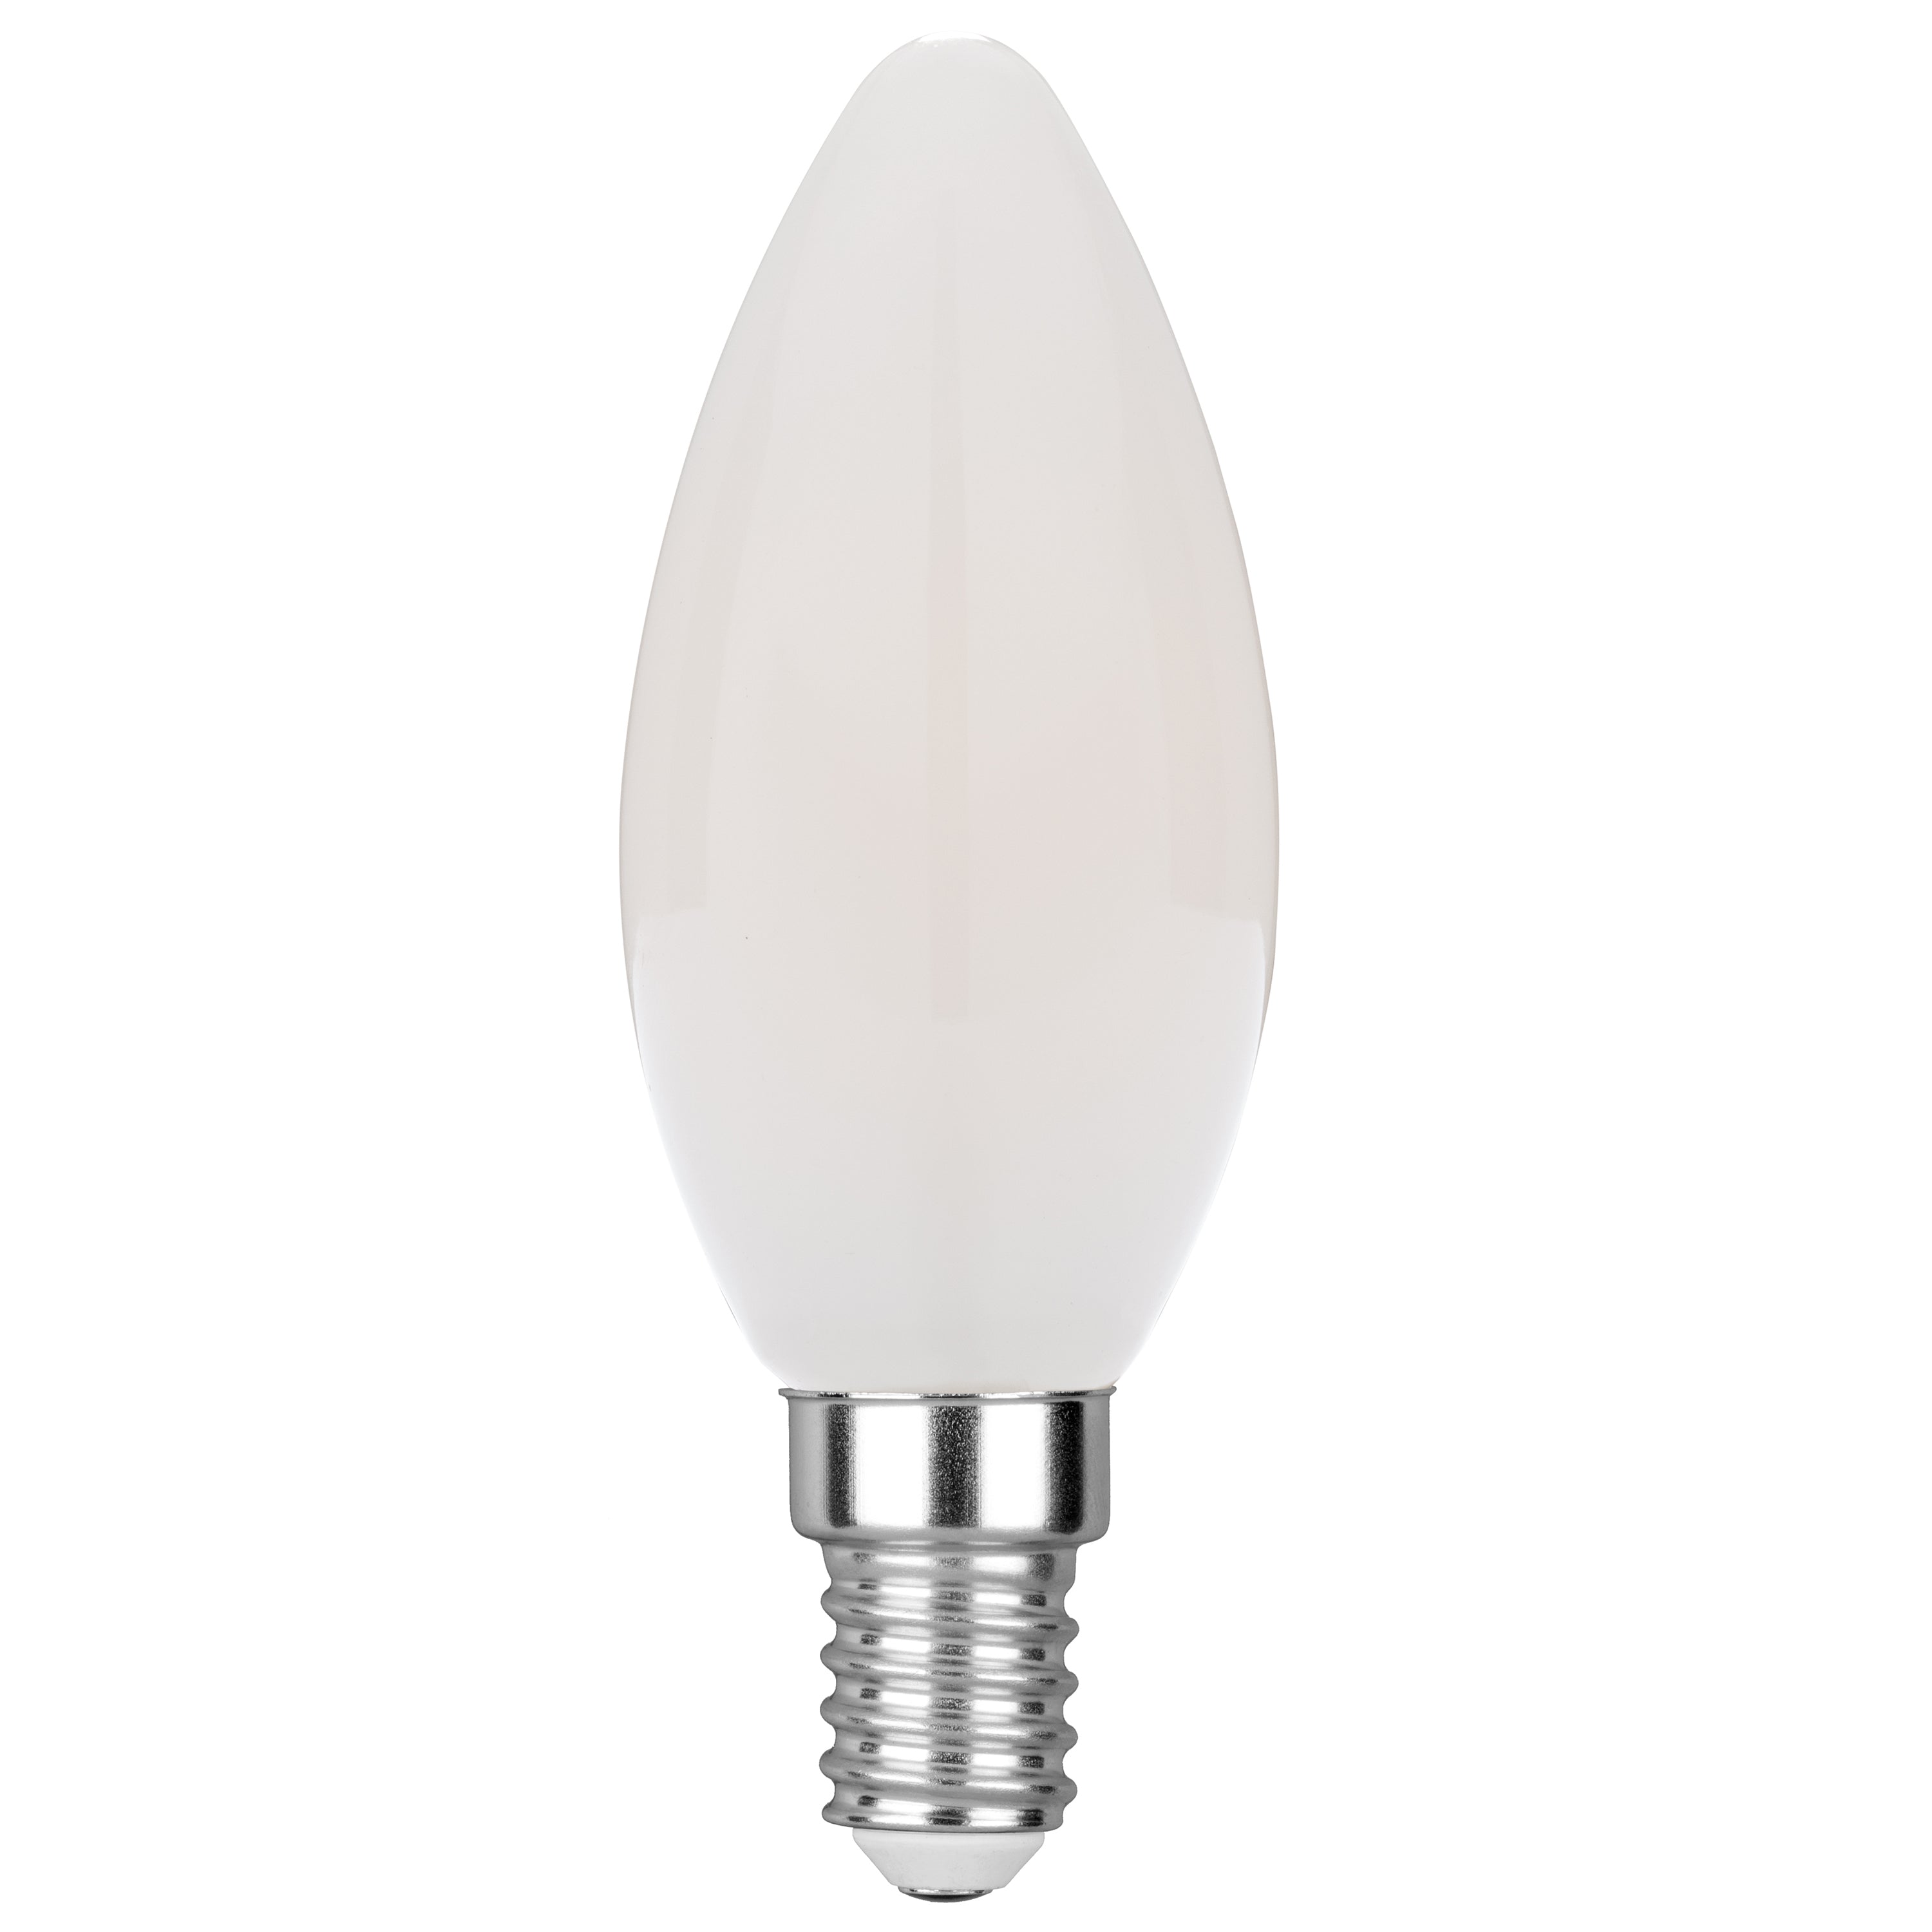 KIT de 3 bombillas LED LUXA de filamento vela blanca E14 4W 400L 35mm 